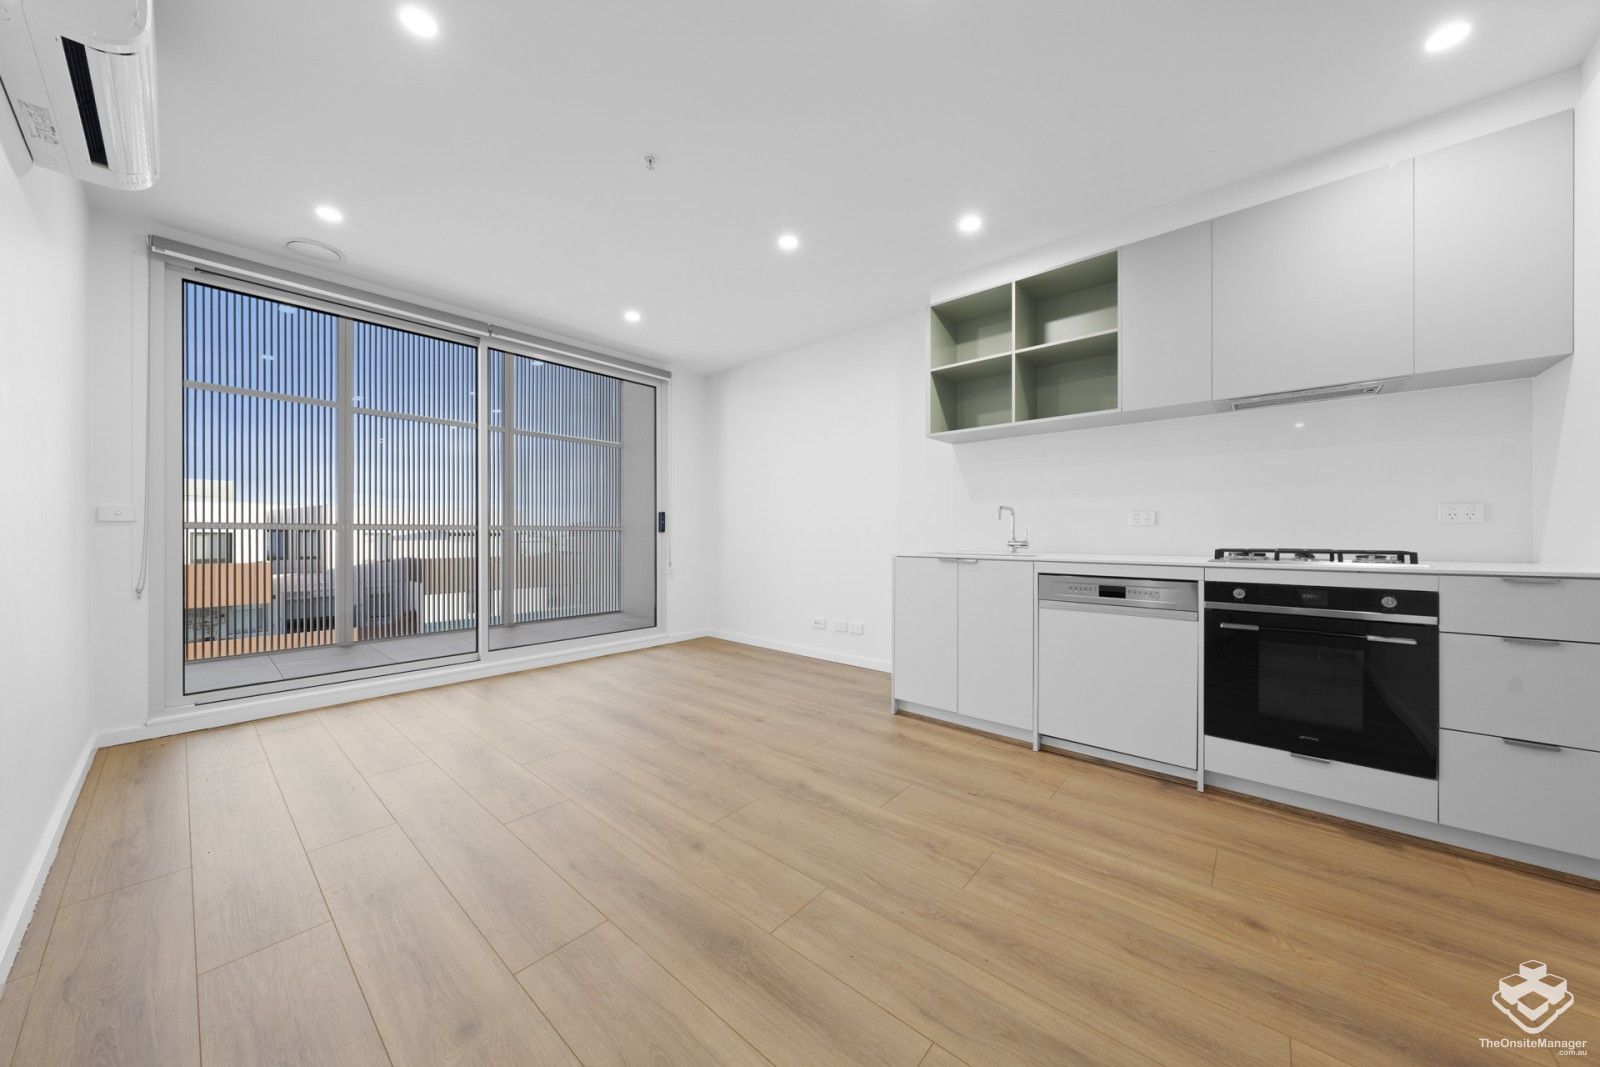 2 bedrooms Apartment / Unit / Flat in 509/812 Sydney Road BRUNSWICK VIC, 3056